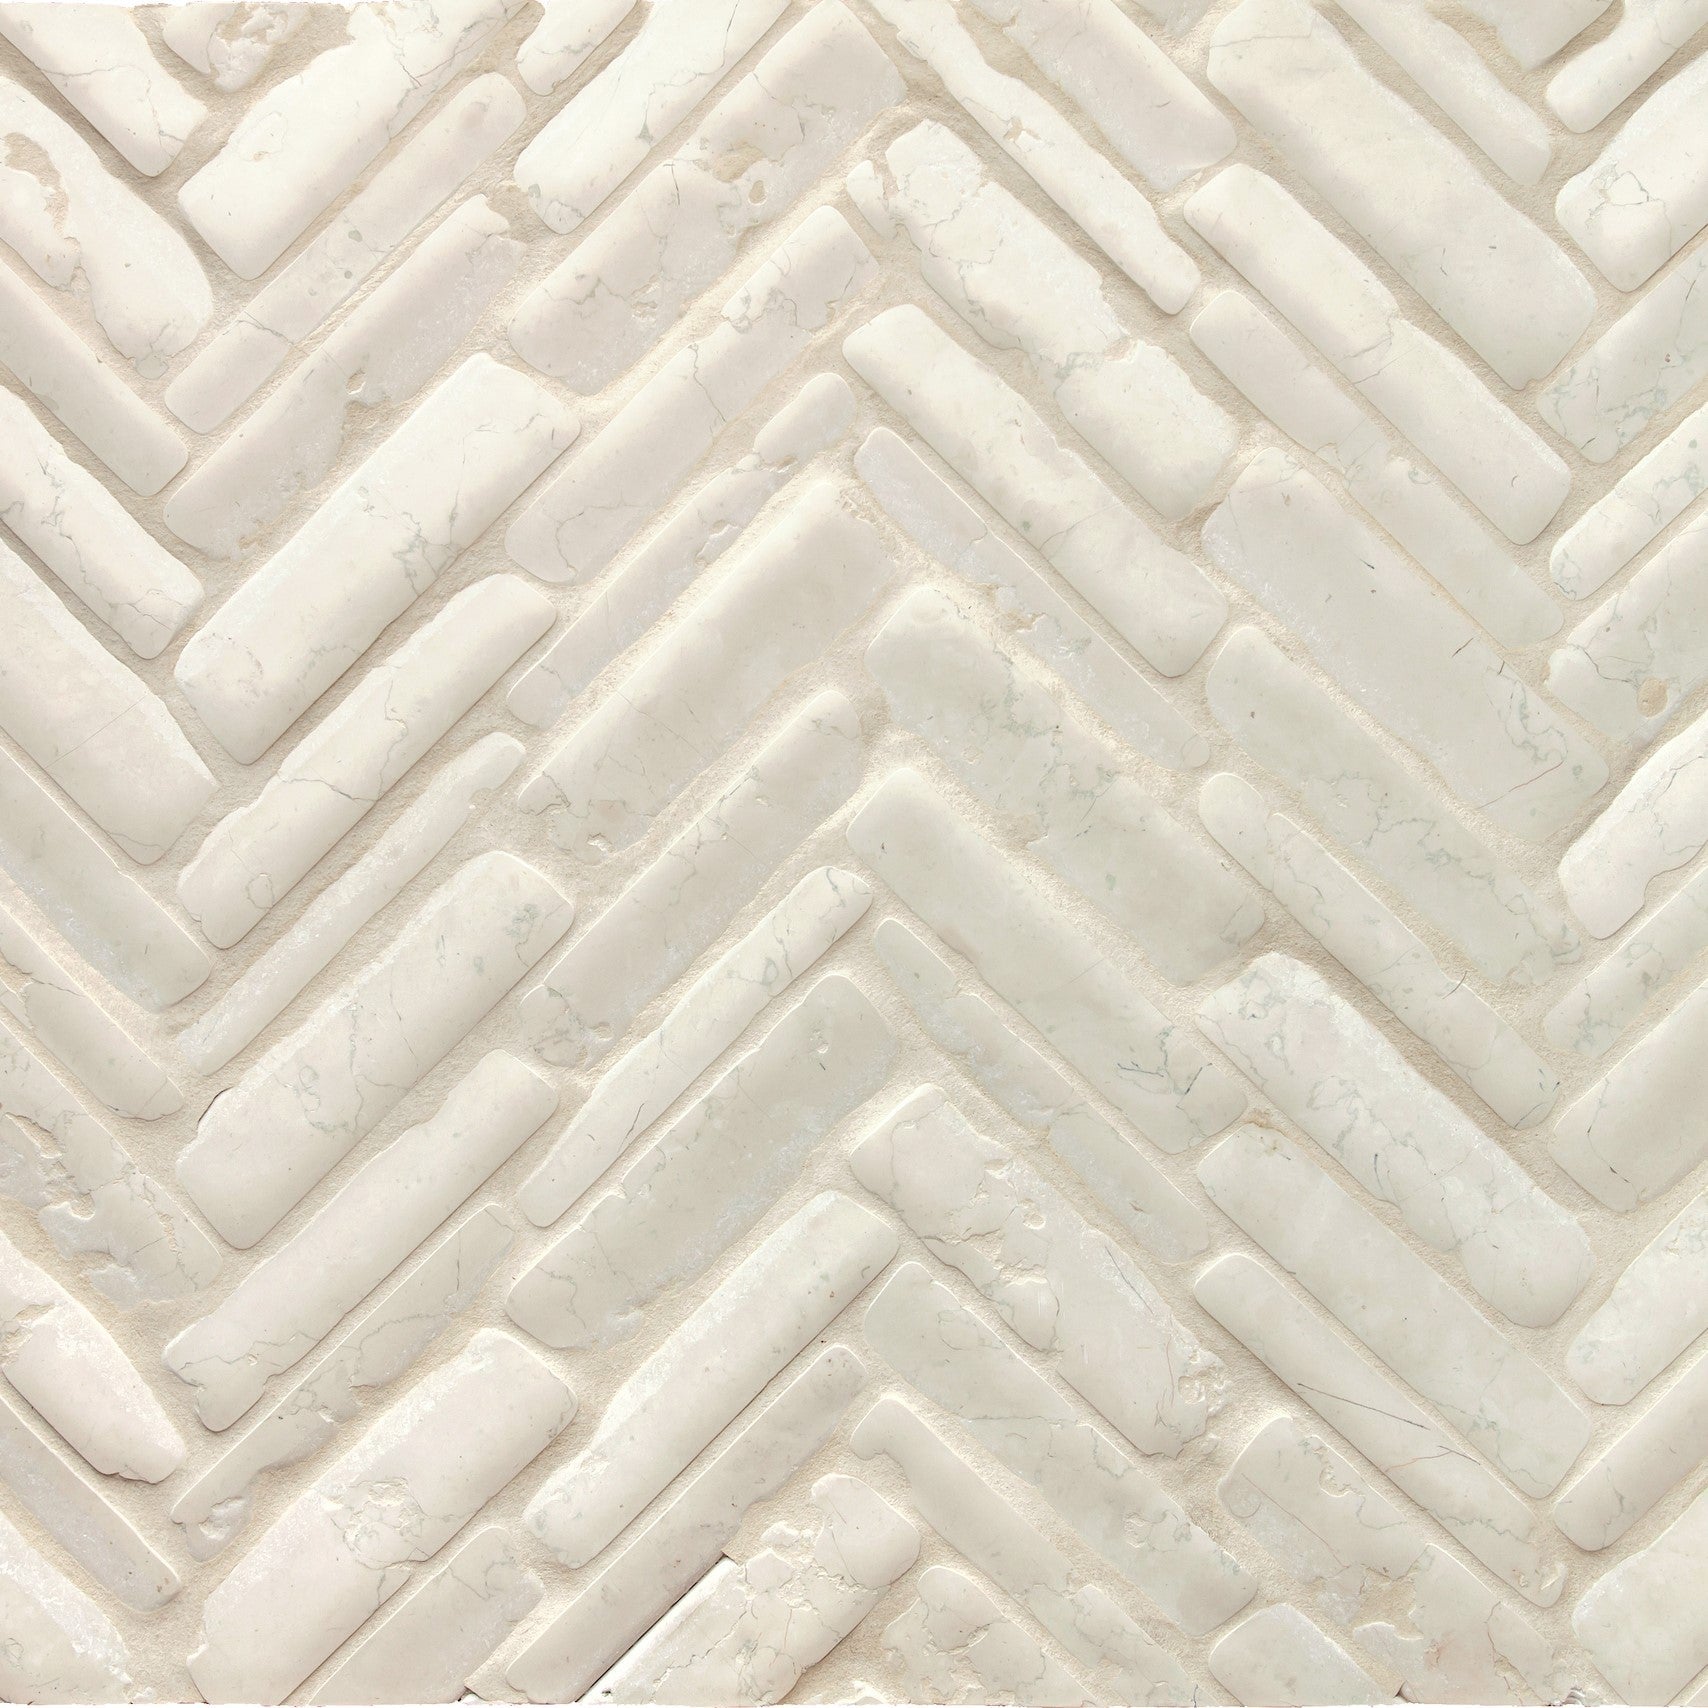 giovanni barbieri timeworn bianco antico natural white marble herringbone pattern mosaic distributed by surface group international